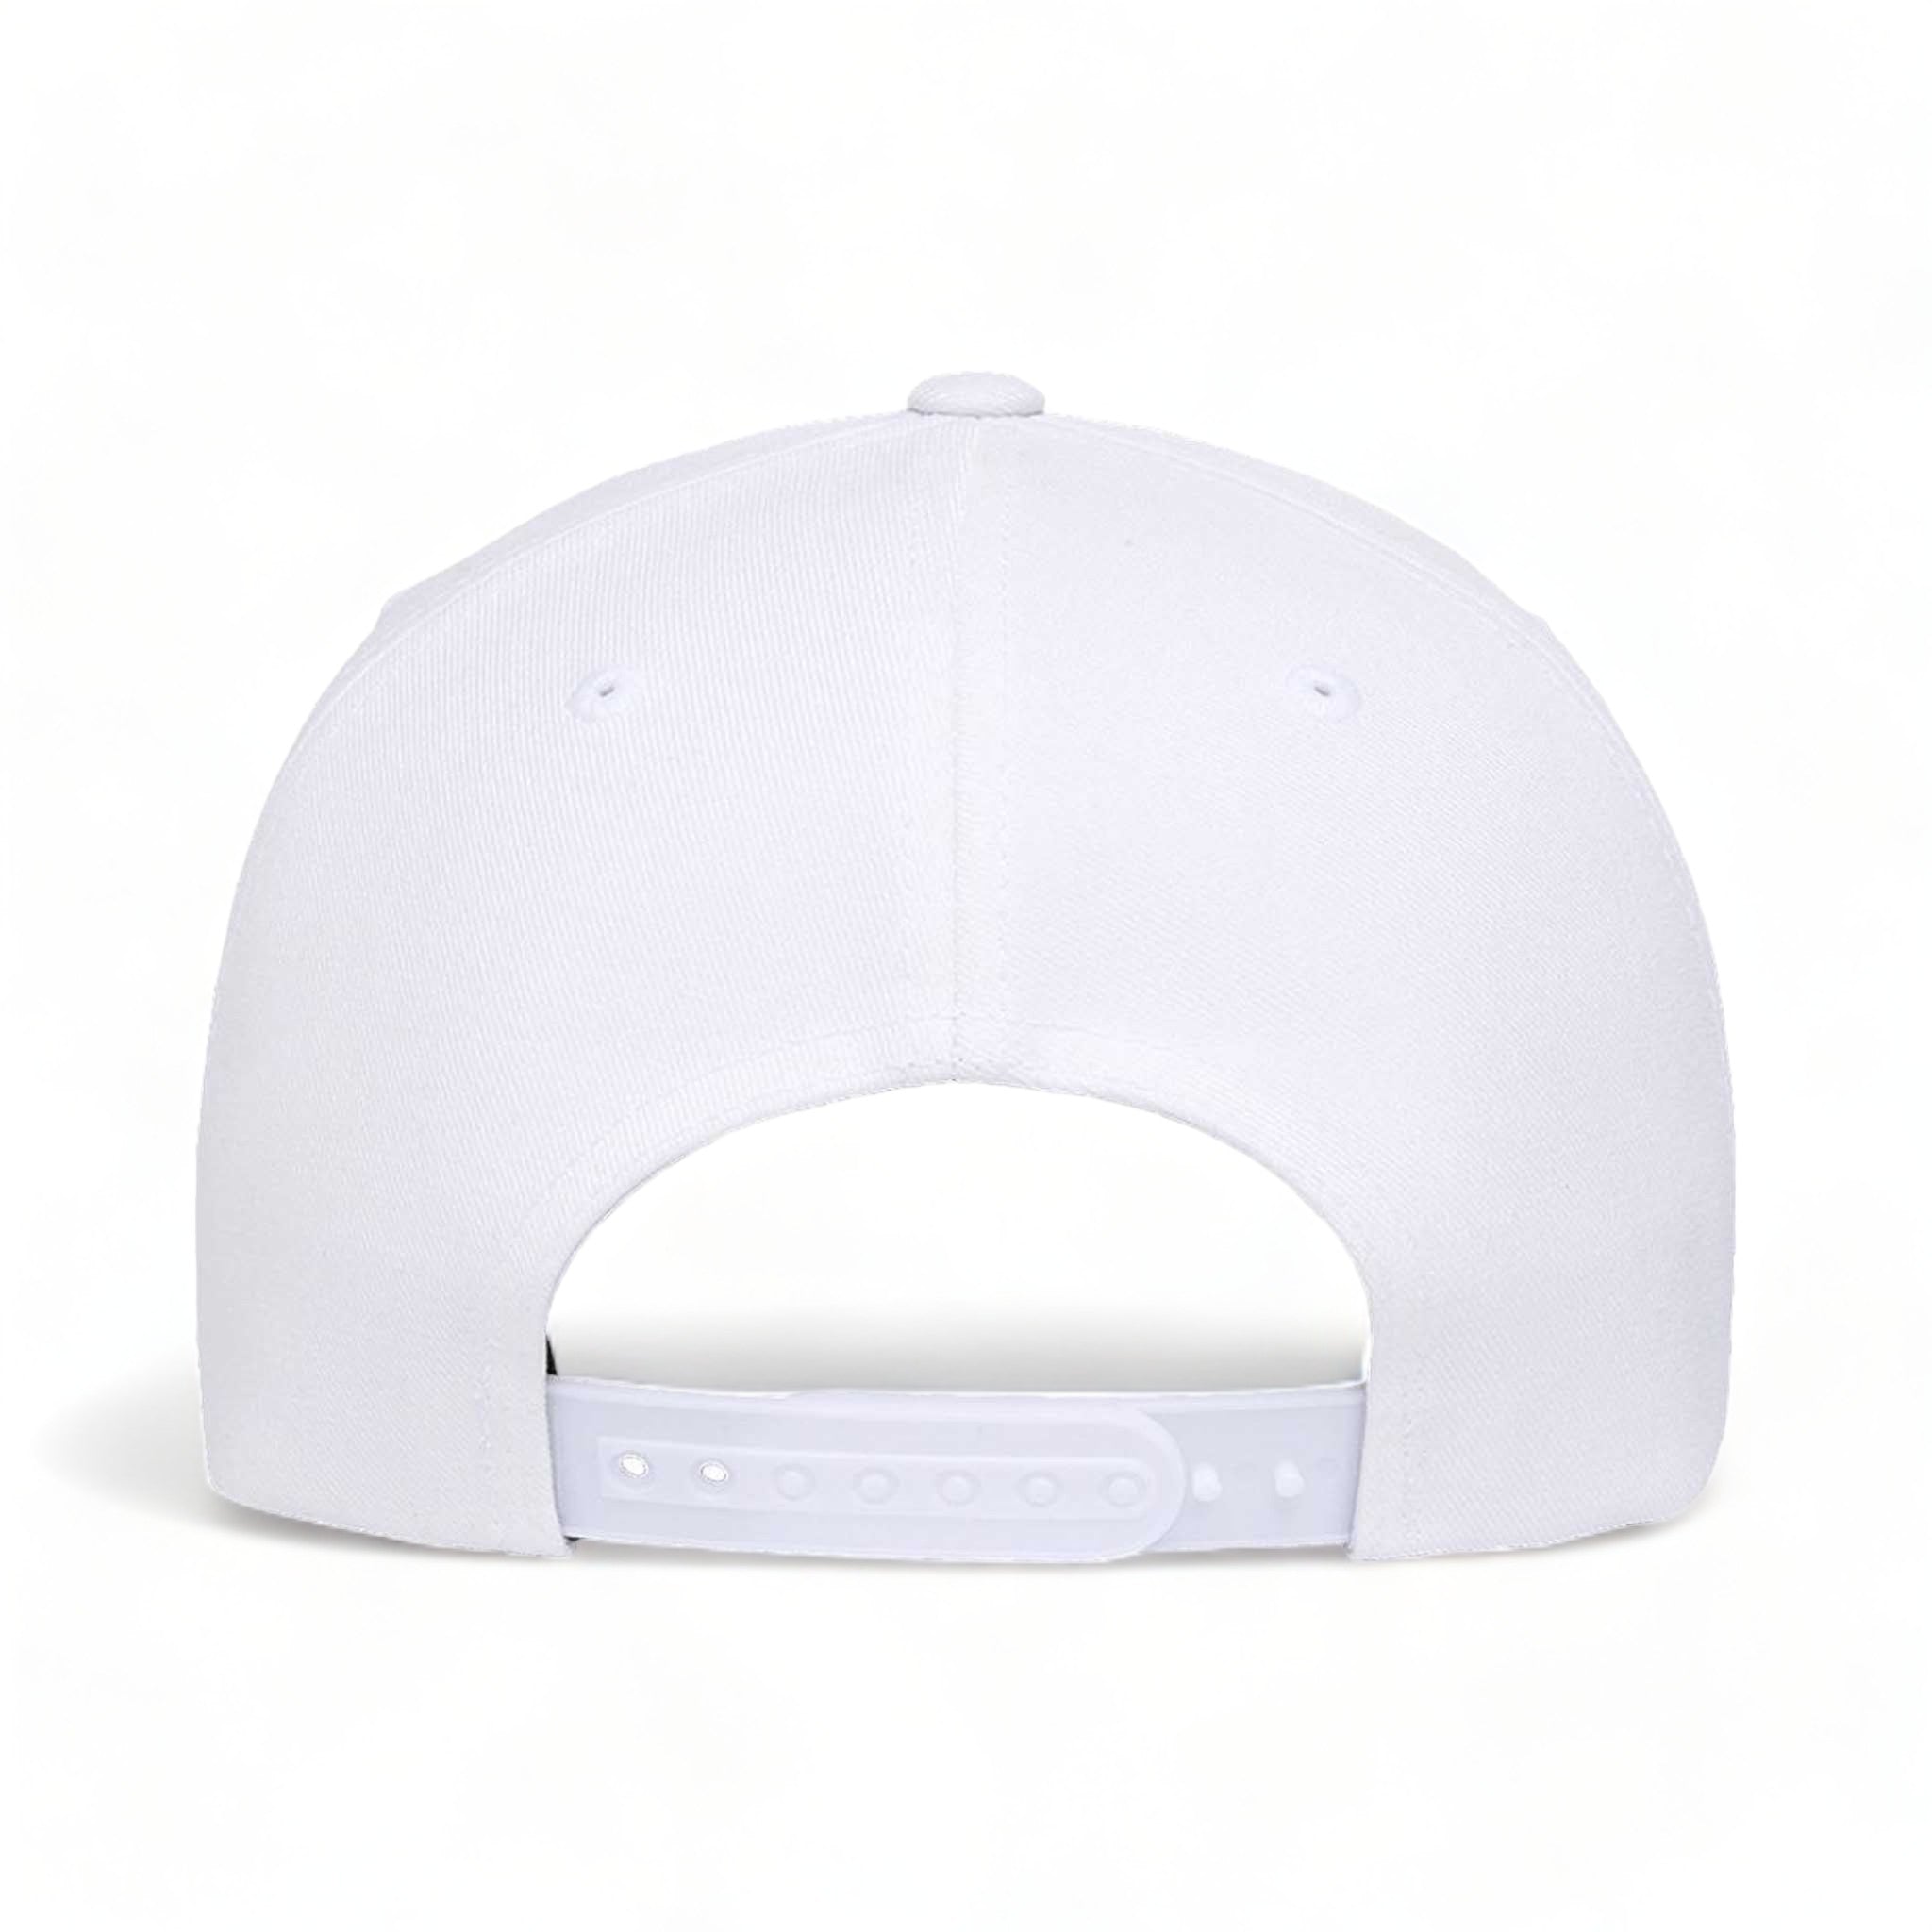 Back view of Flexfit 6110NU custom hat in white